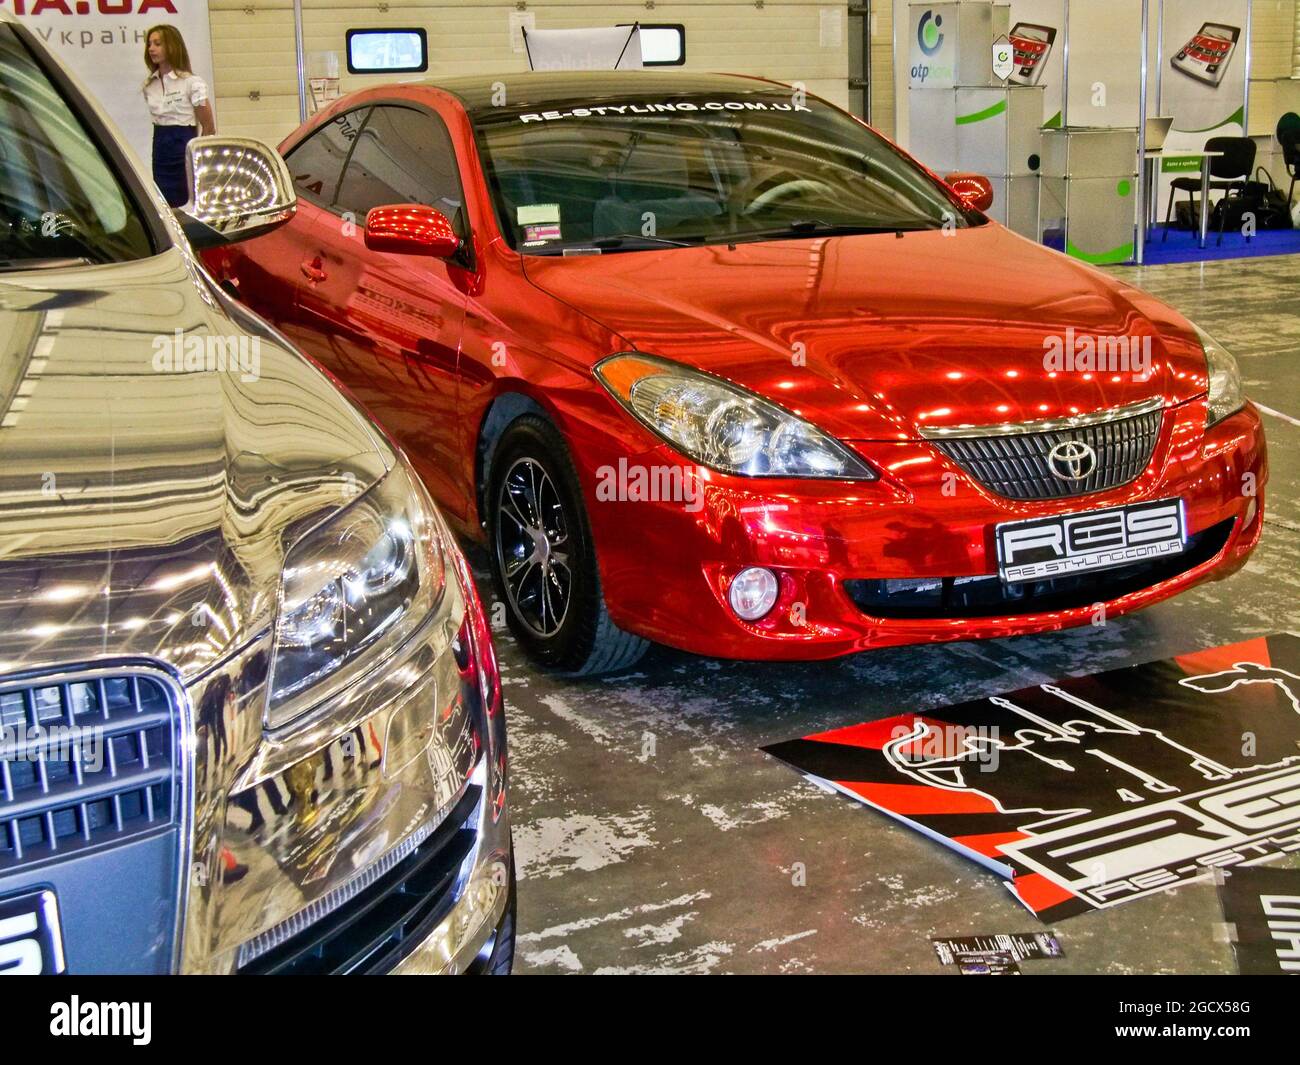 Kiev, Ucraina; 10 aprile 2014. Rosso magnetico cromo Audi Q7 e Toyota Solara Foto Stock